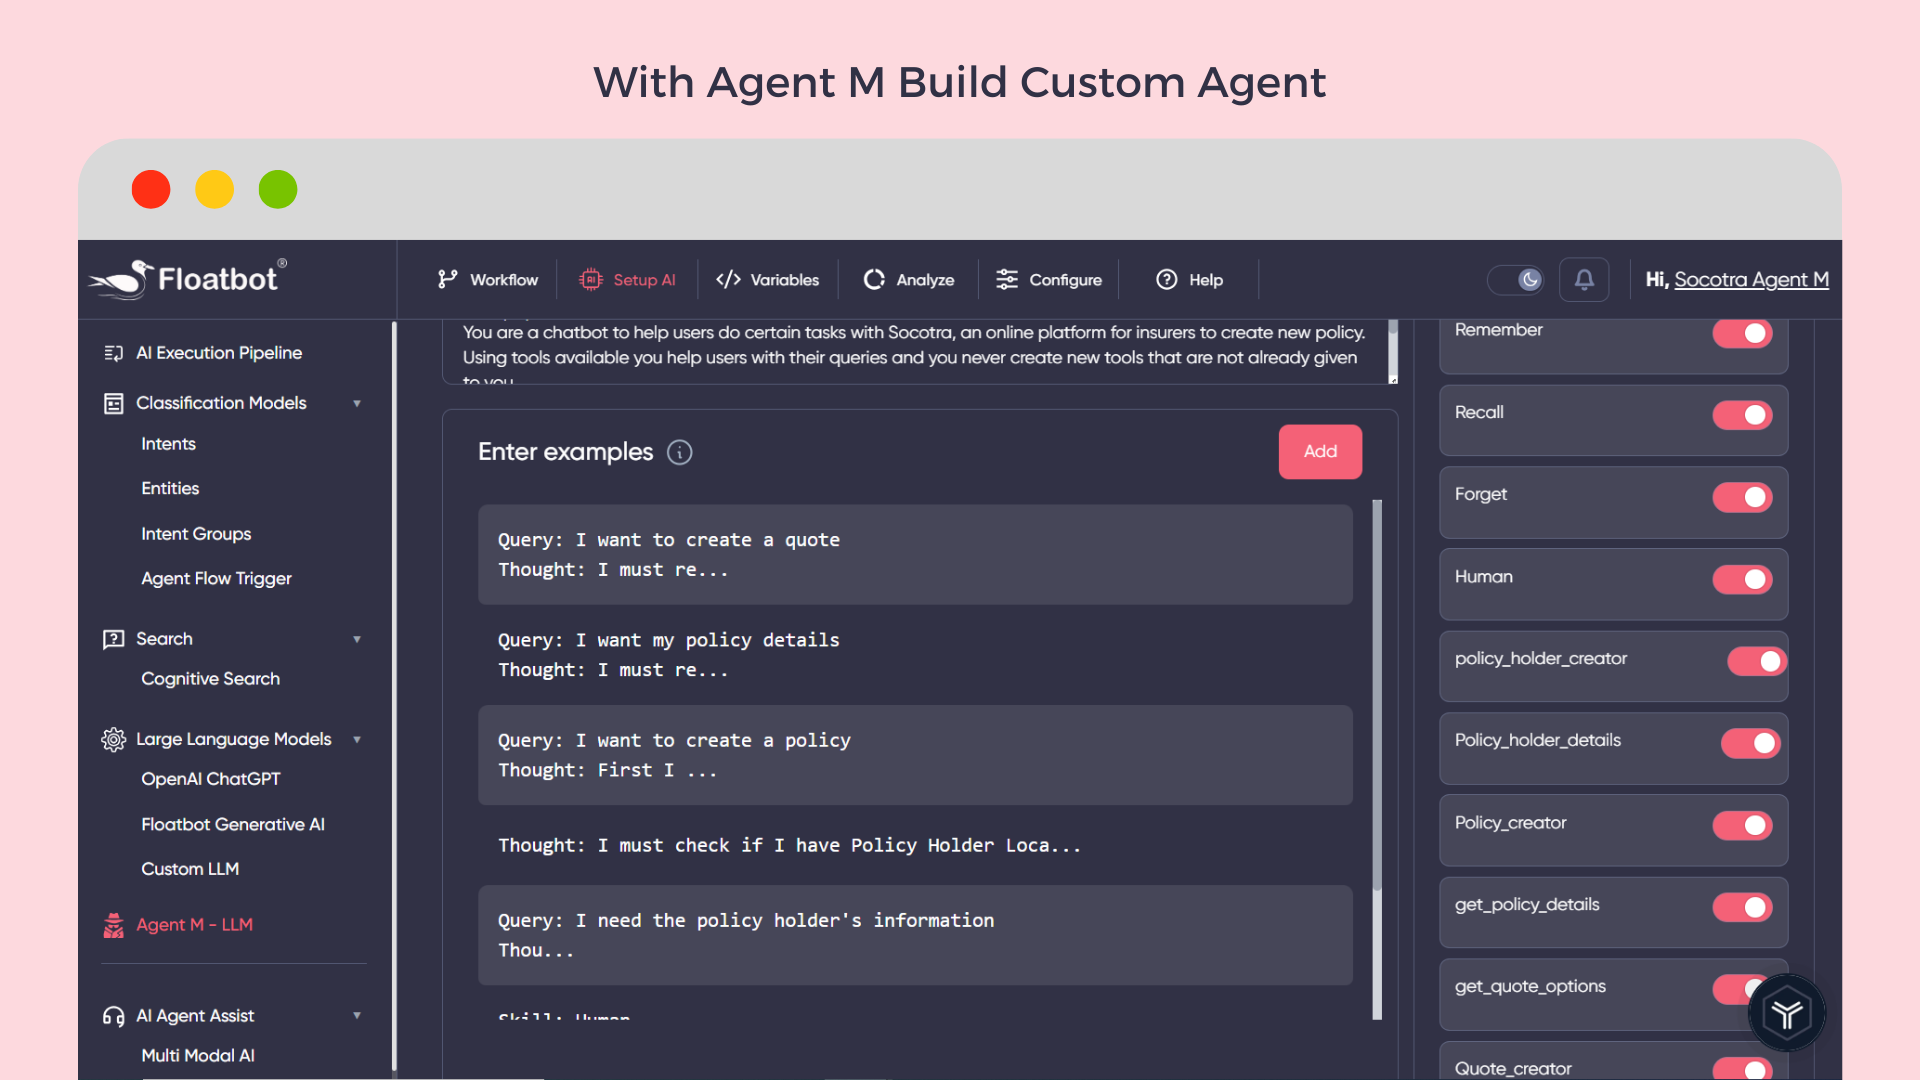 With Agent M Build Custom Agent